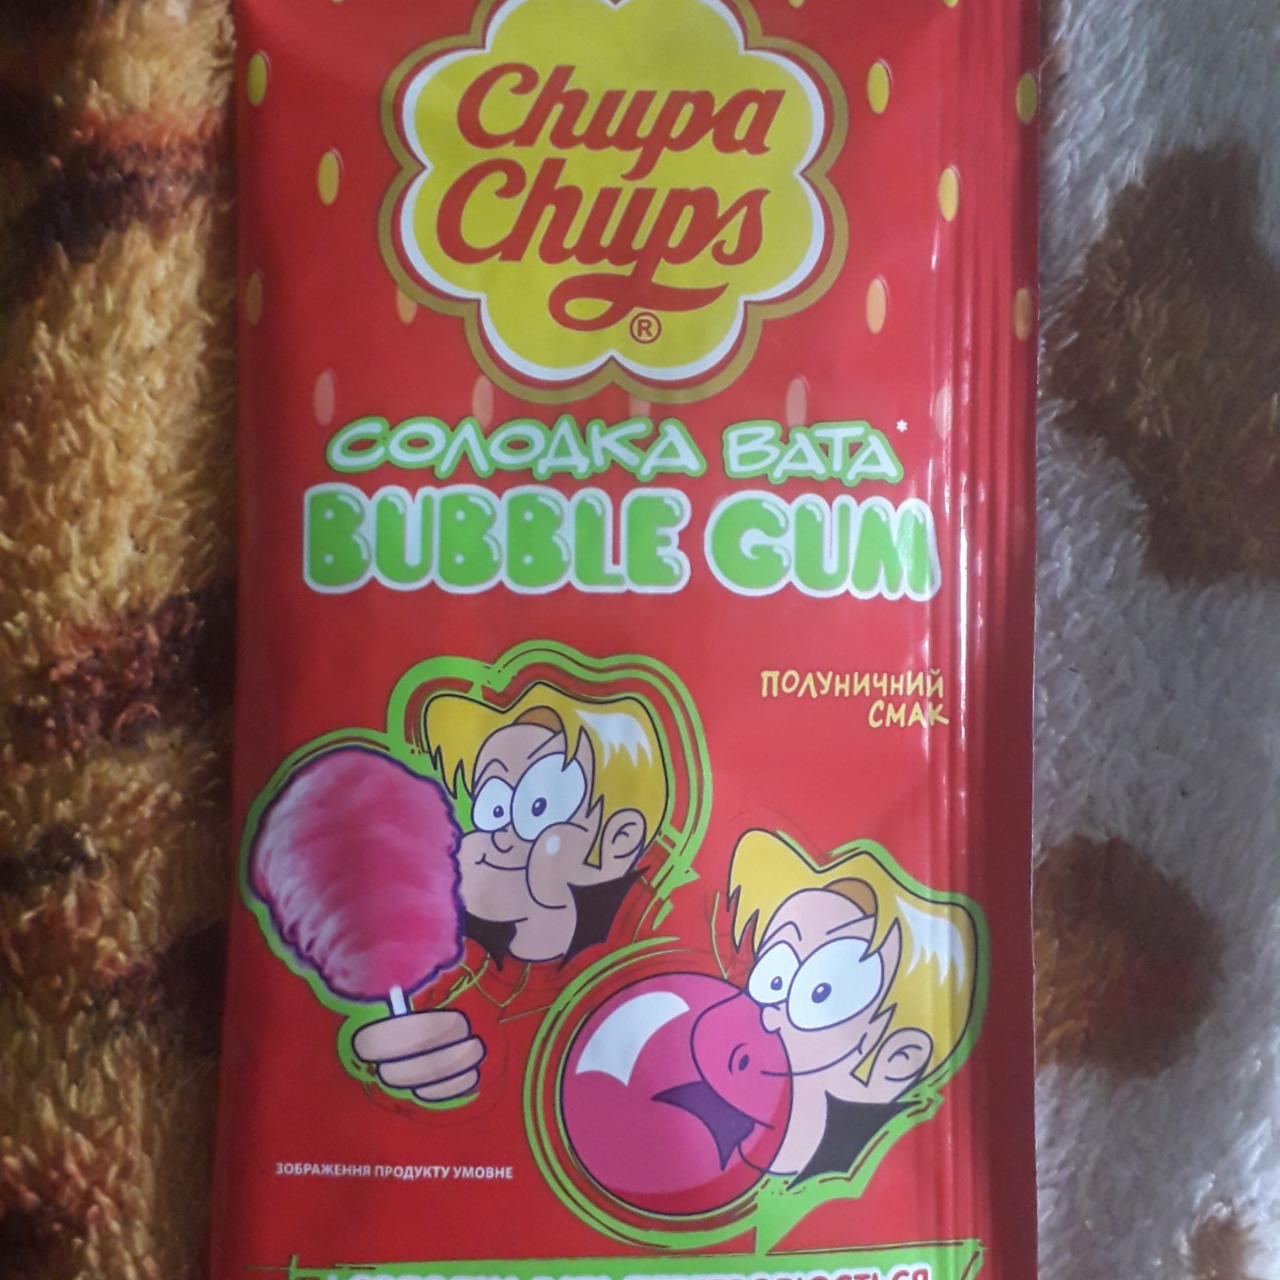 Фото - Жувальна гумка Солодка вата Bubble Gum полуничний смак Chupa Chups